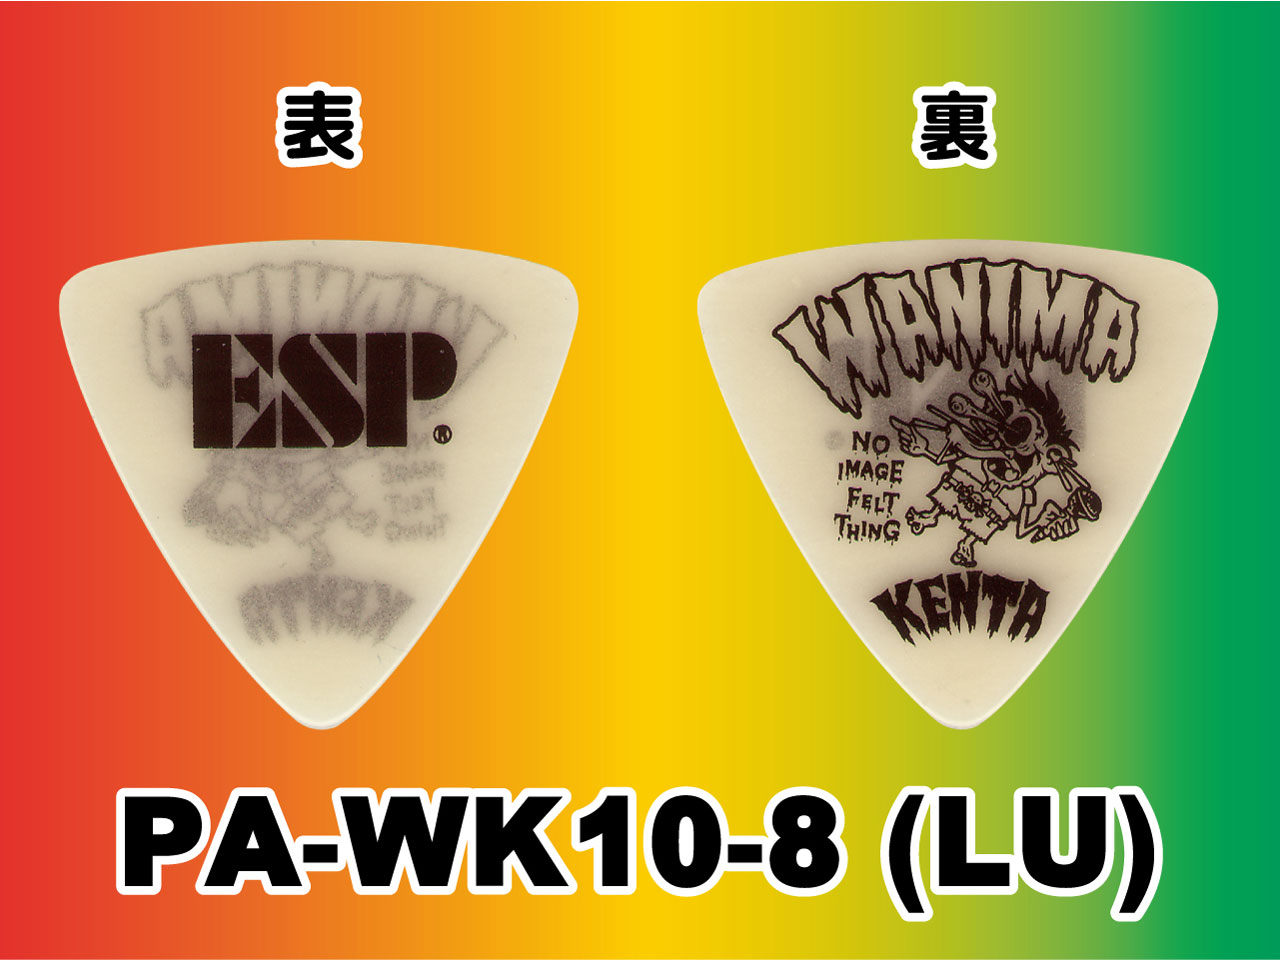 ESP(イーエスピー) Artist Pick Series PA-WK10-8 (WANIMA/KENTA Model)